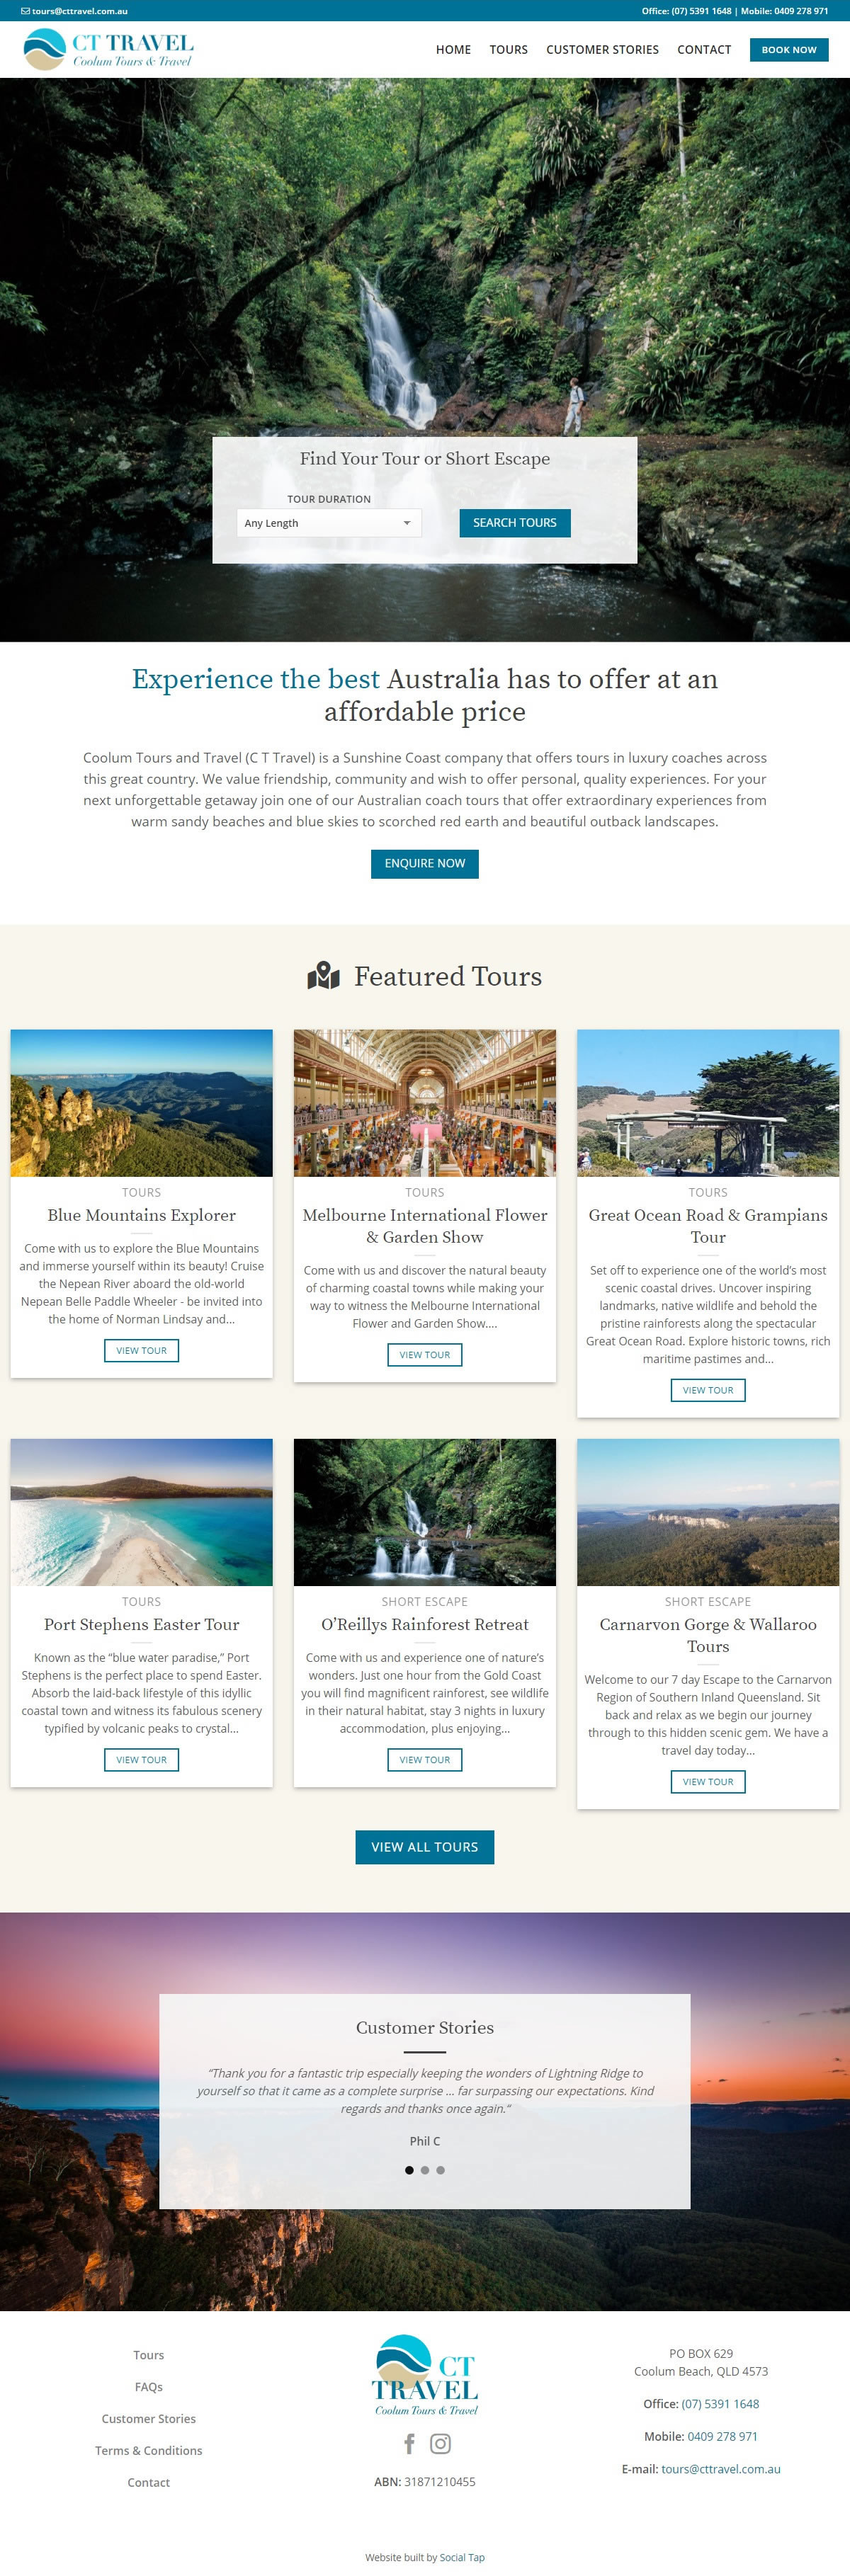 Coolum Tours and Travel Website Design